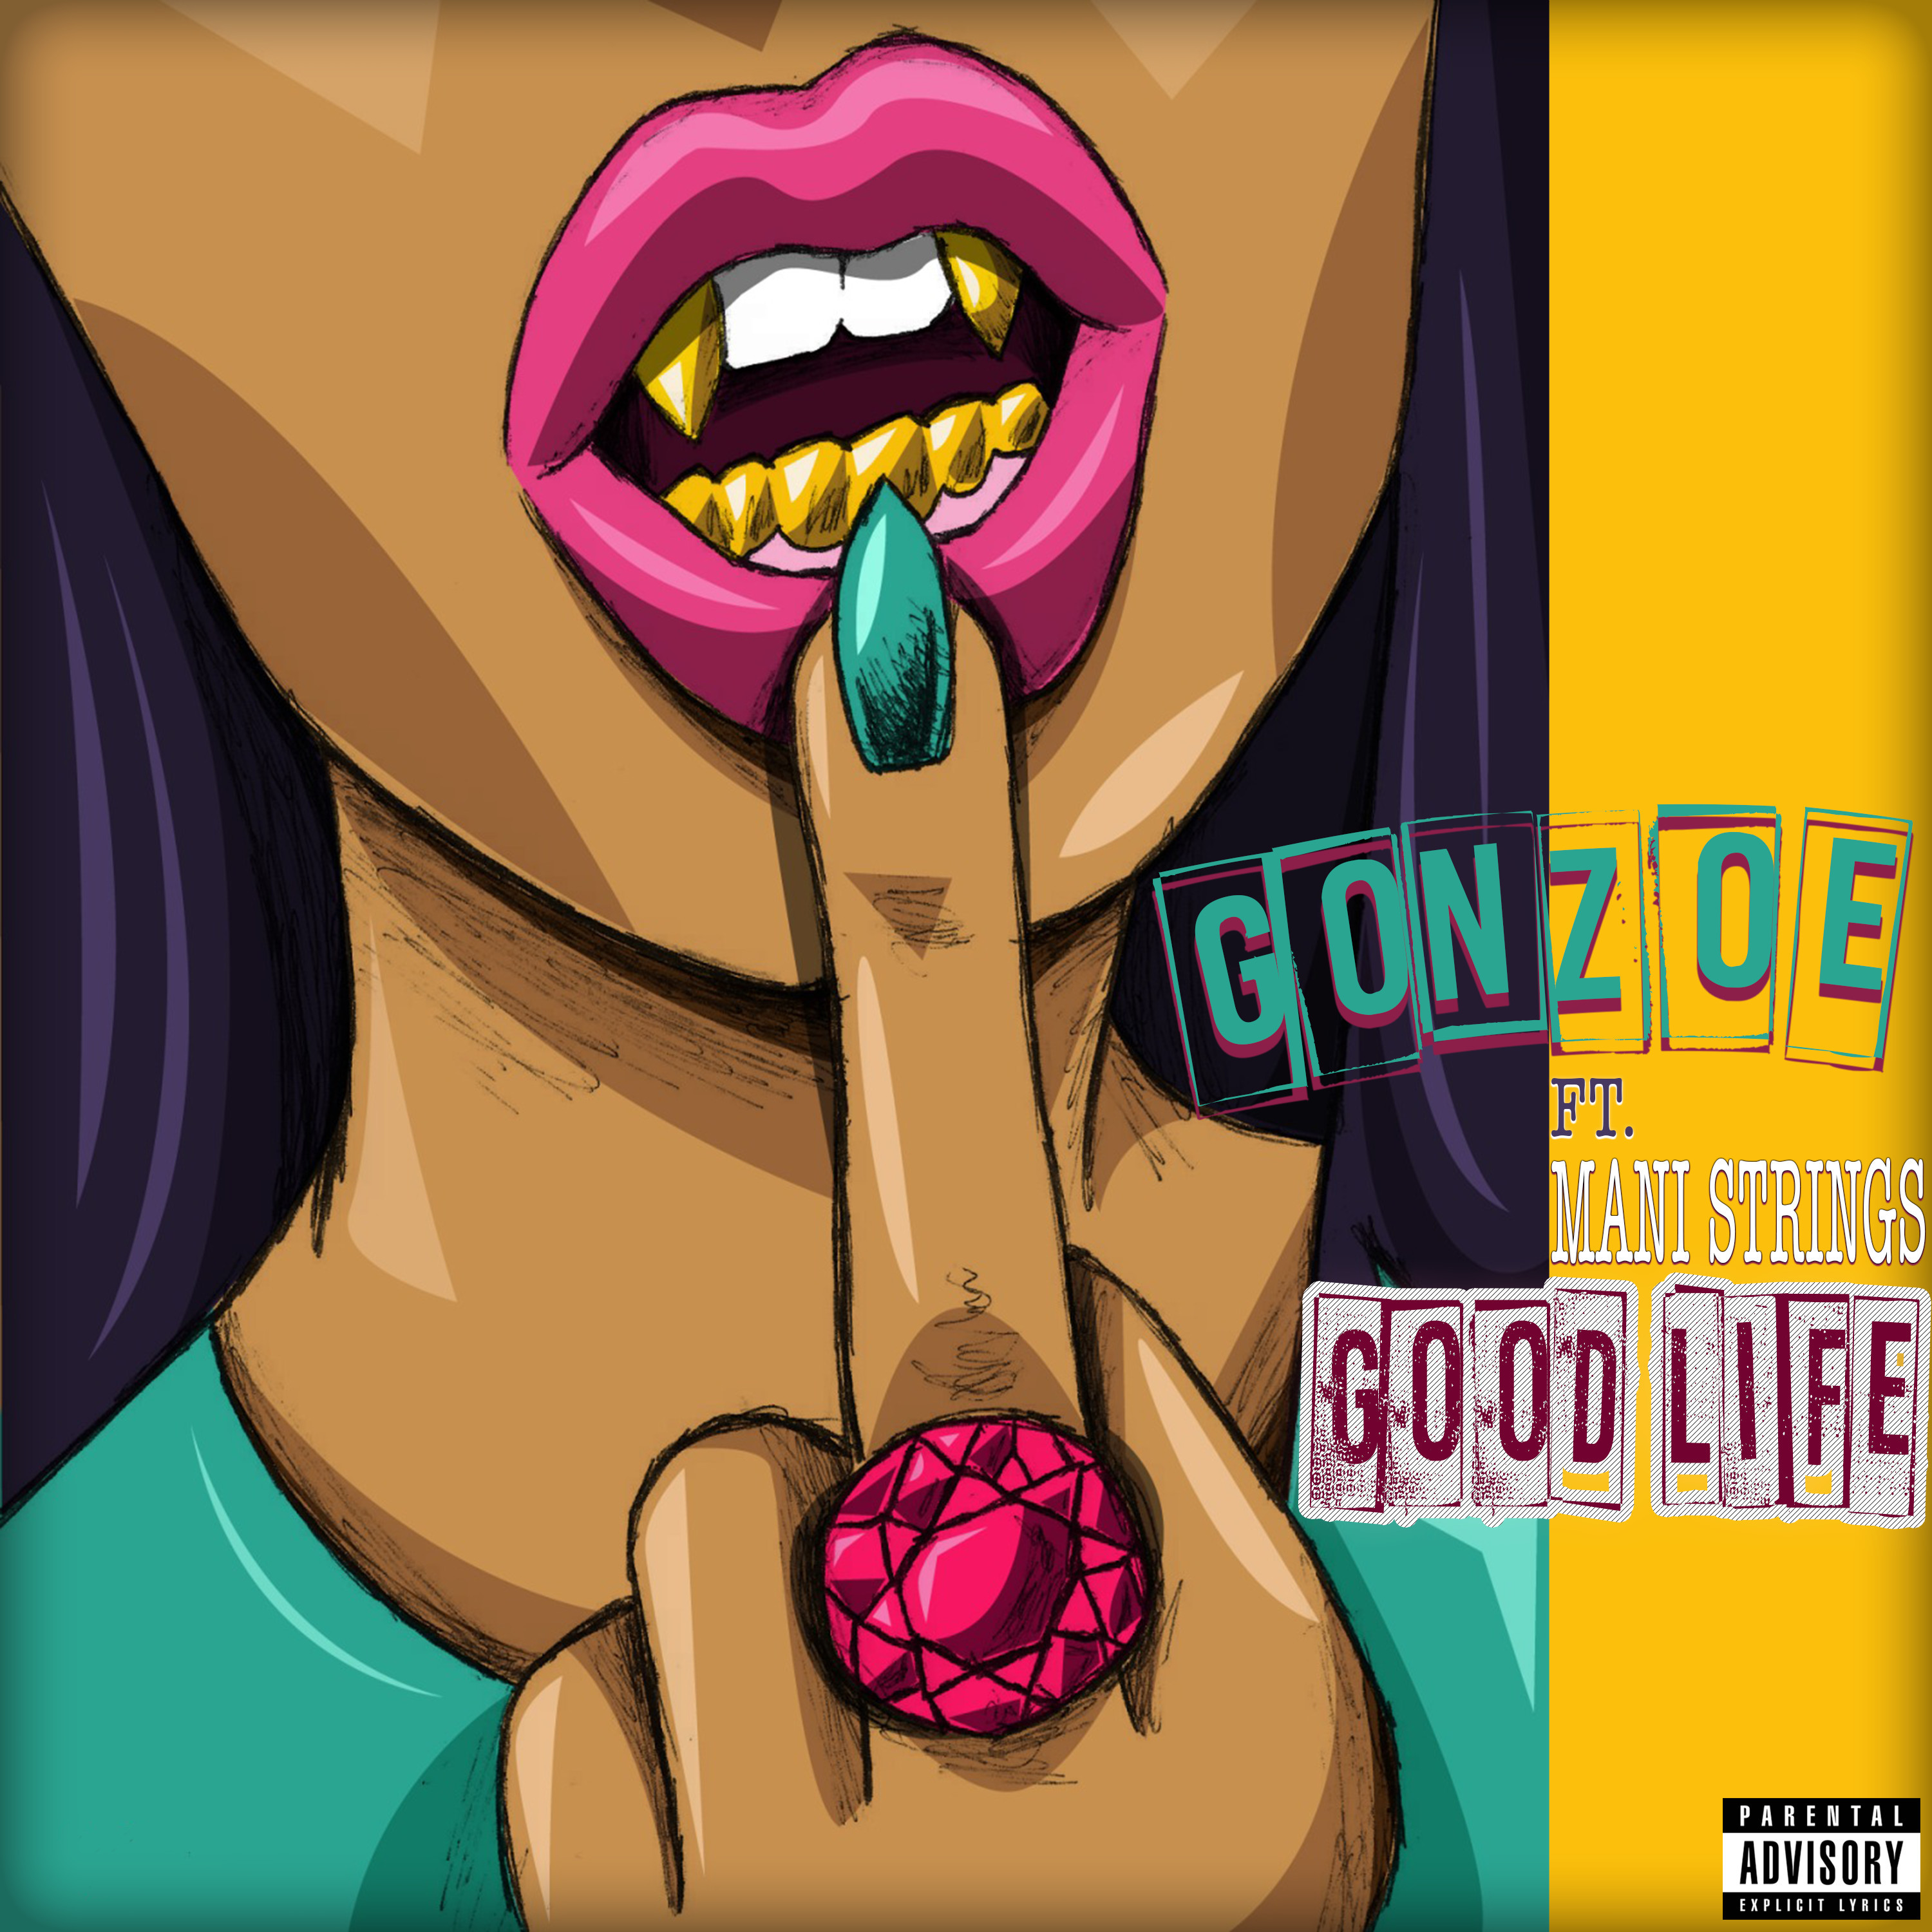 Good-Life-gonzo